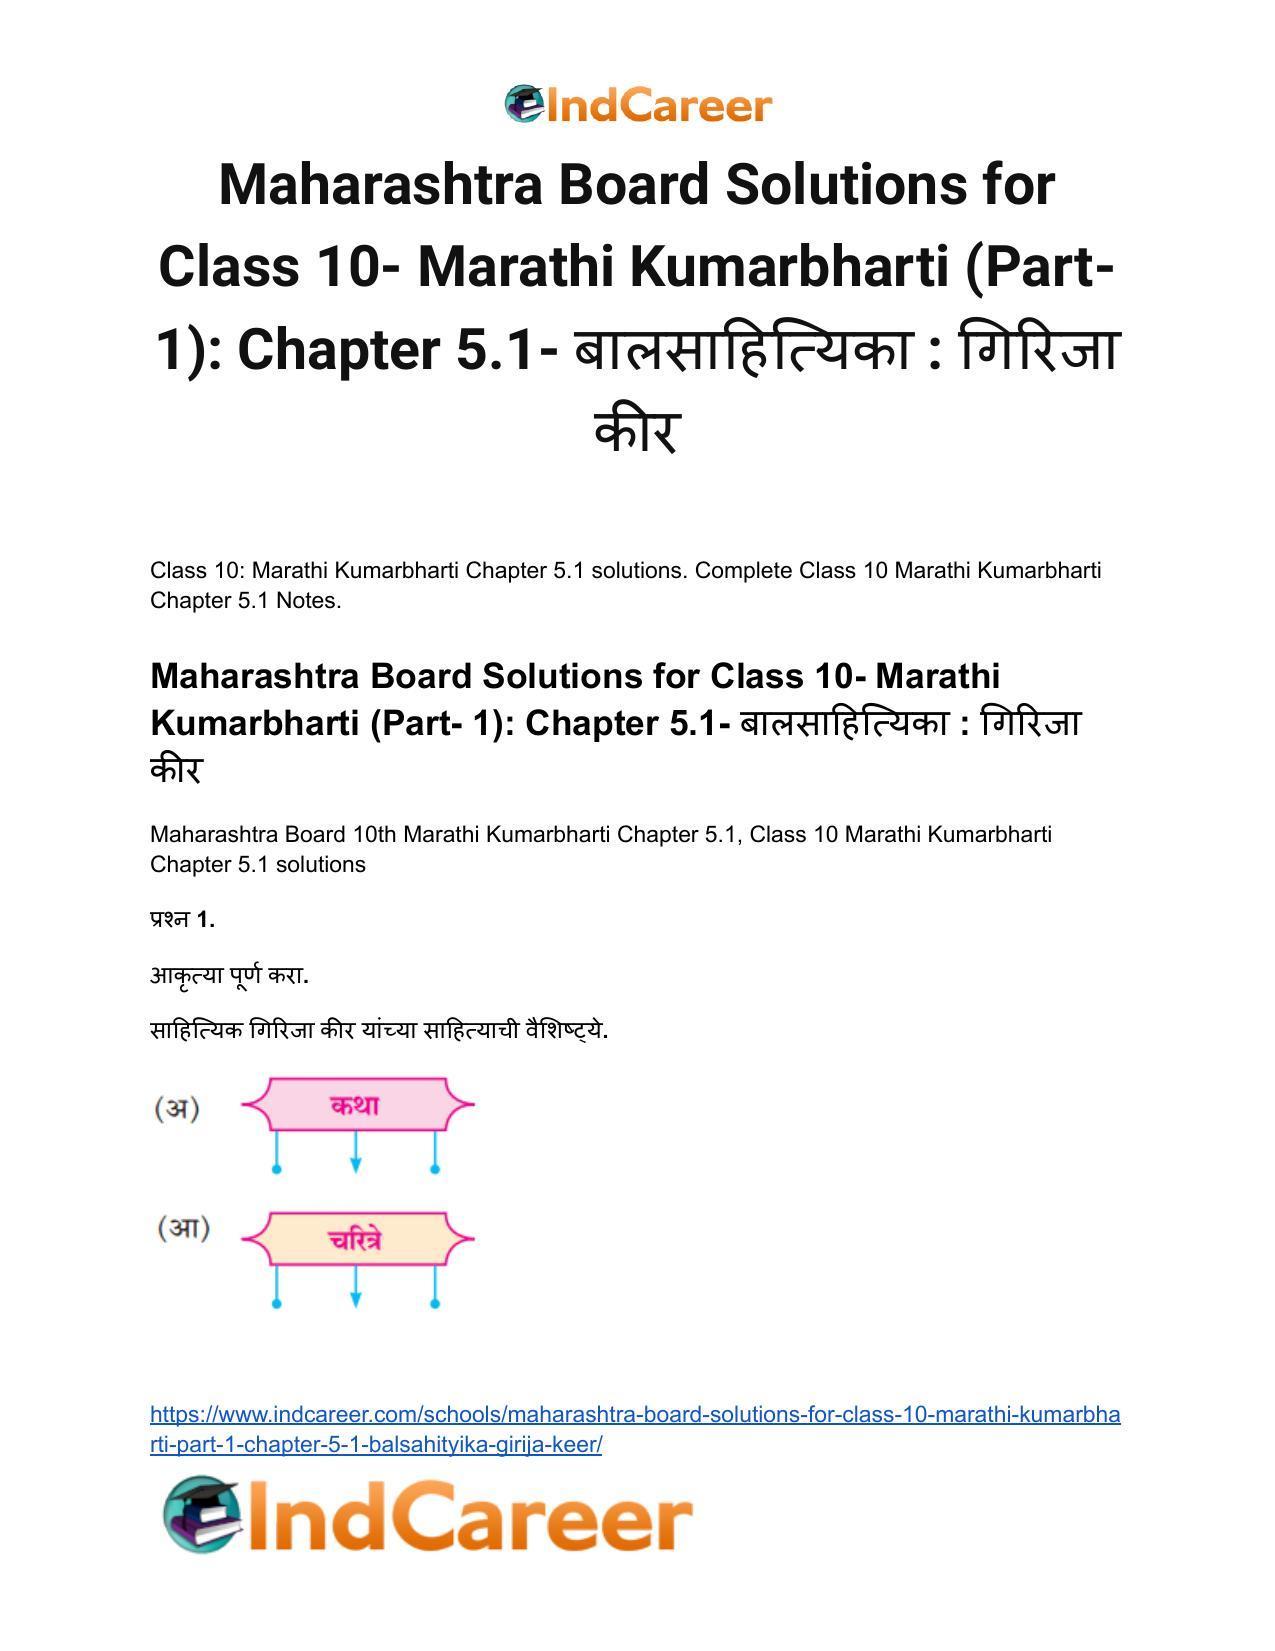 Maharashtra Board Solutions for Class 10- Marathi Kumarbharti (Part- 1): Chapter 5.1- बालसाहित्यिका : गिरिजा कीर - Page 2